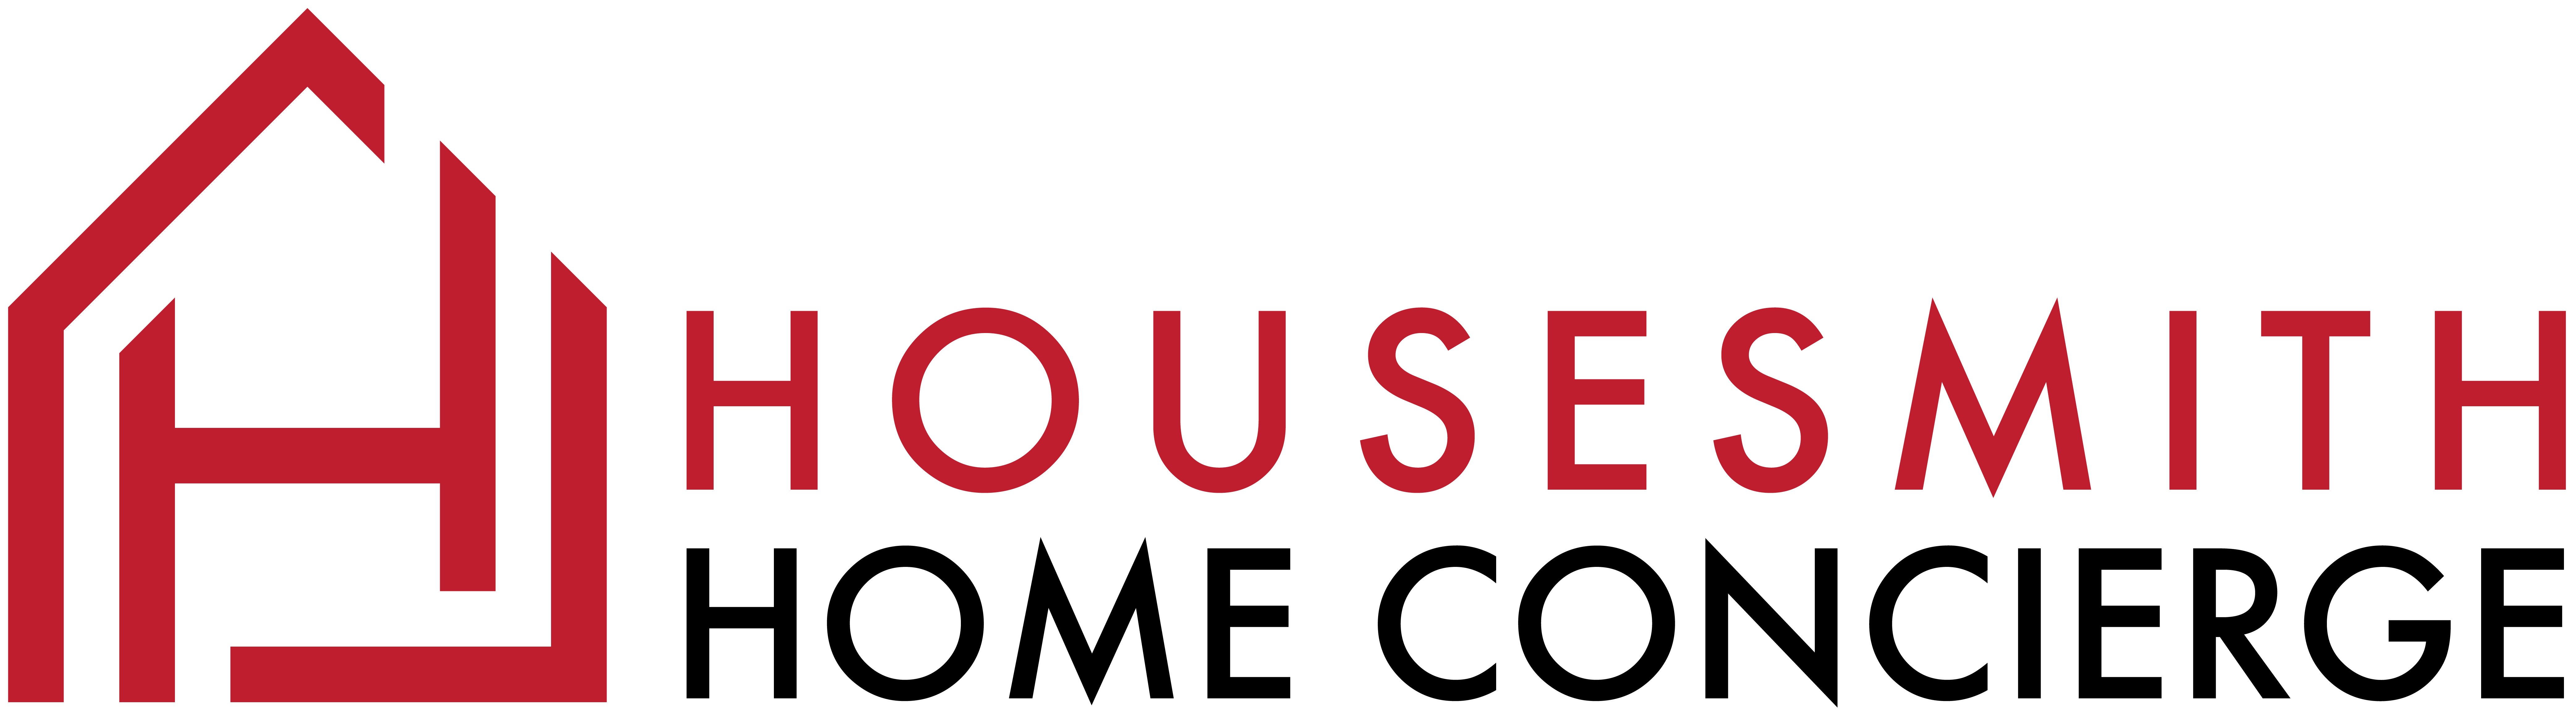 Housesmith Home Concierge